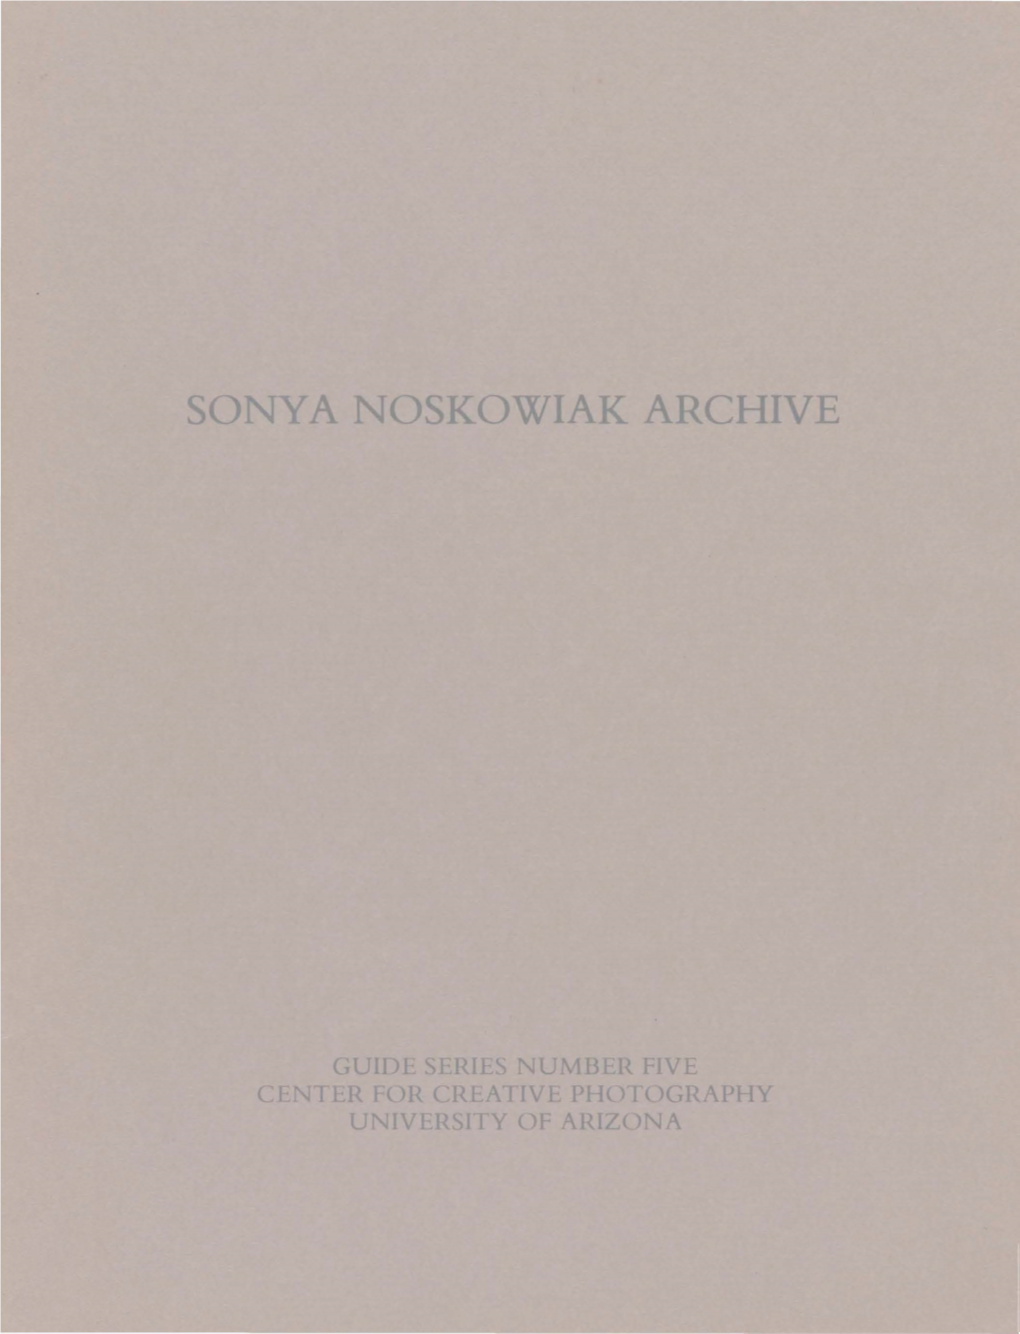 Sonya Noskowiak Archive